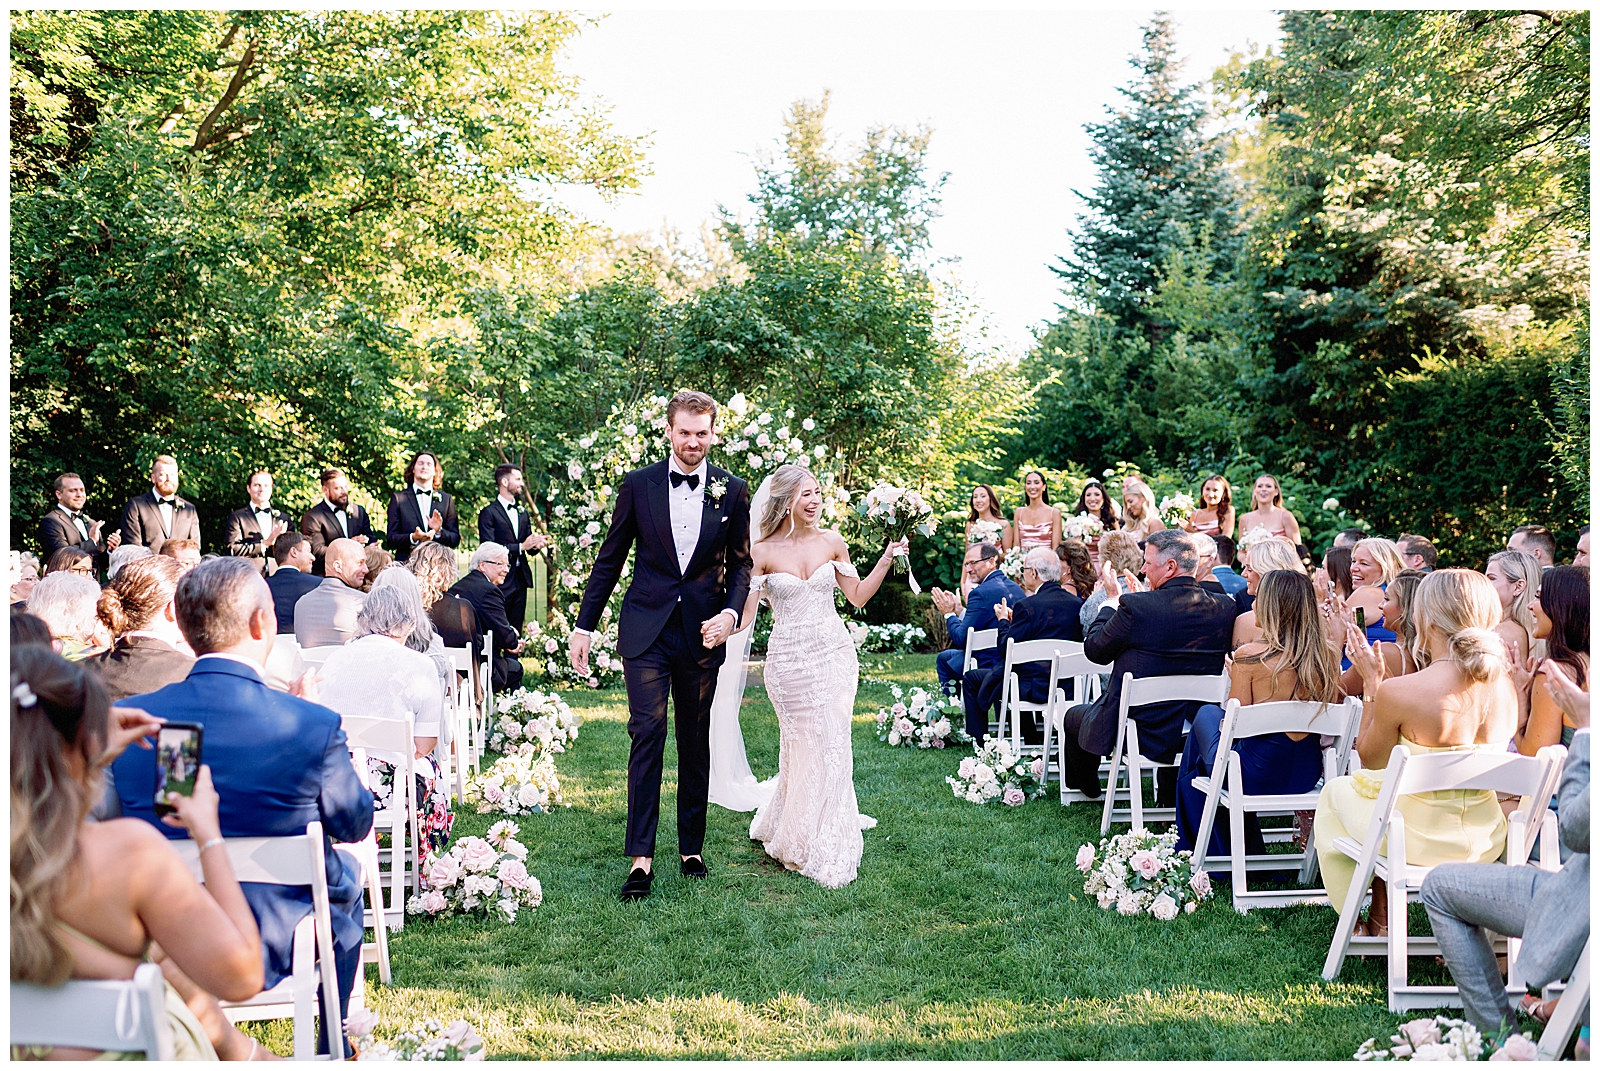 Graydon Hall Manor Toronto Wedding Ceremony in the Gardens Summer Romantic Florals Celebration | Jacqueline James Photography Toronto Wedding Photographer